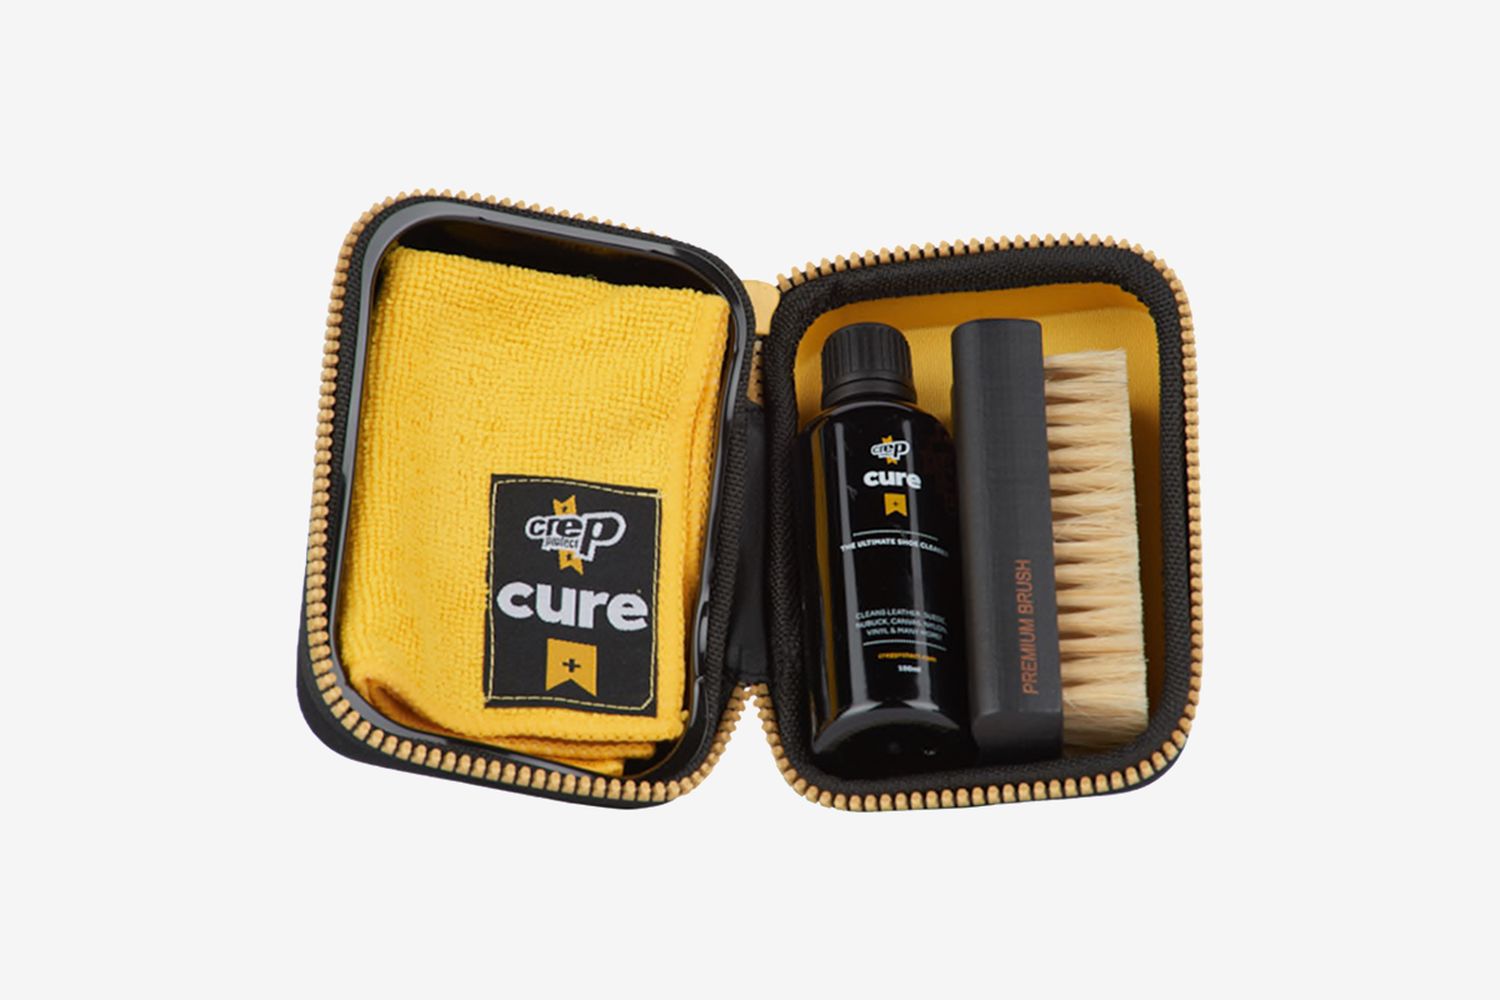 Cure Kit